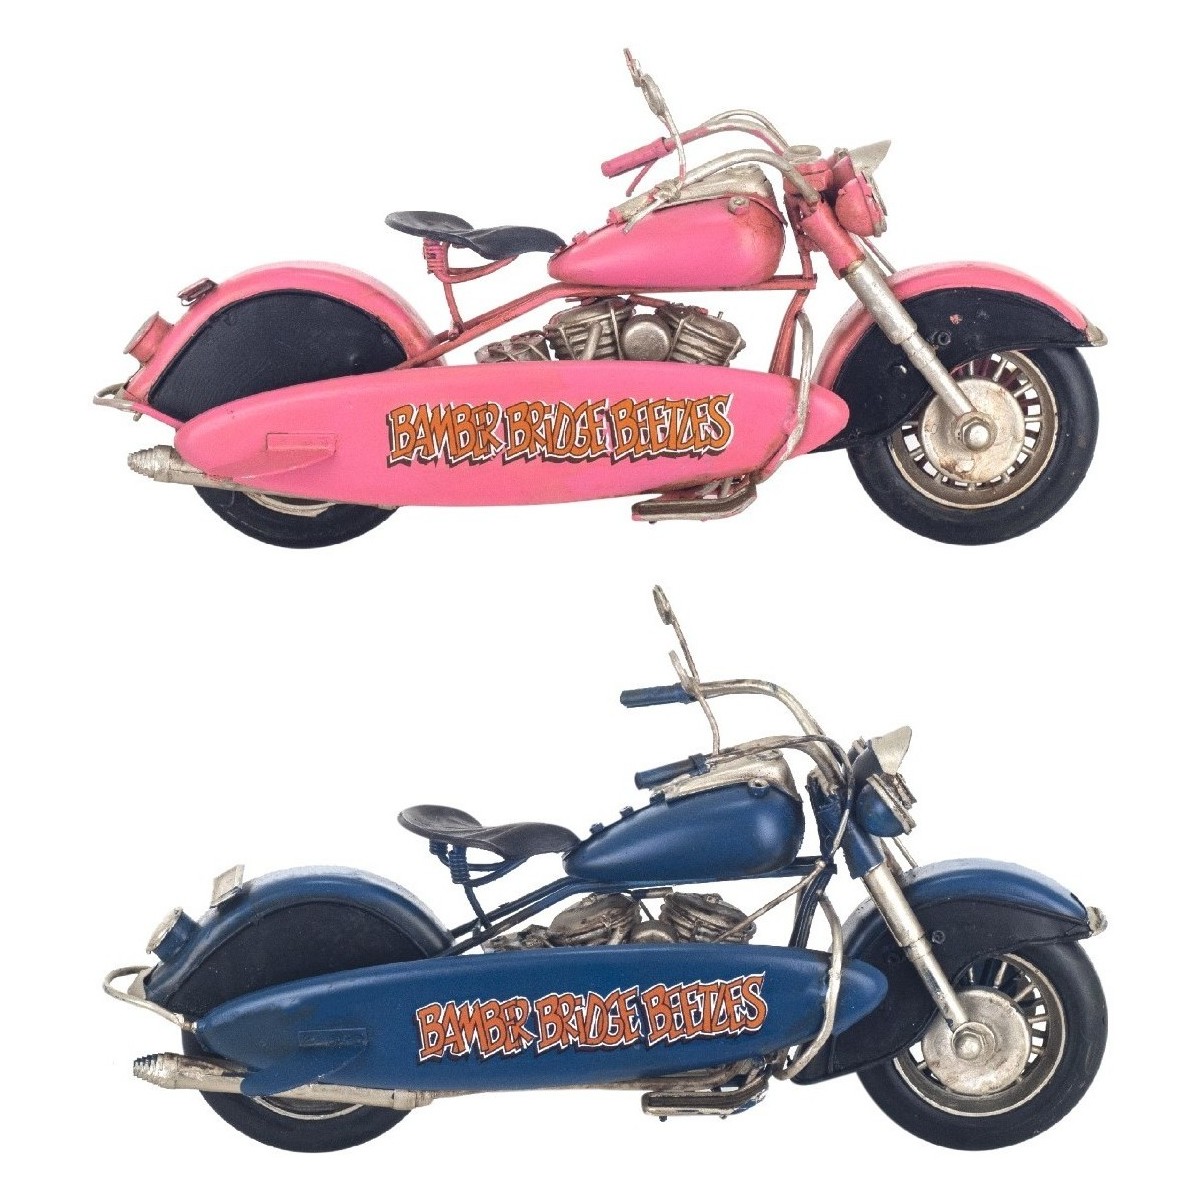 Home Statuetten und Figuren Signes Grimalt Motorrad Set 2 U Multicolor